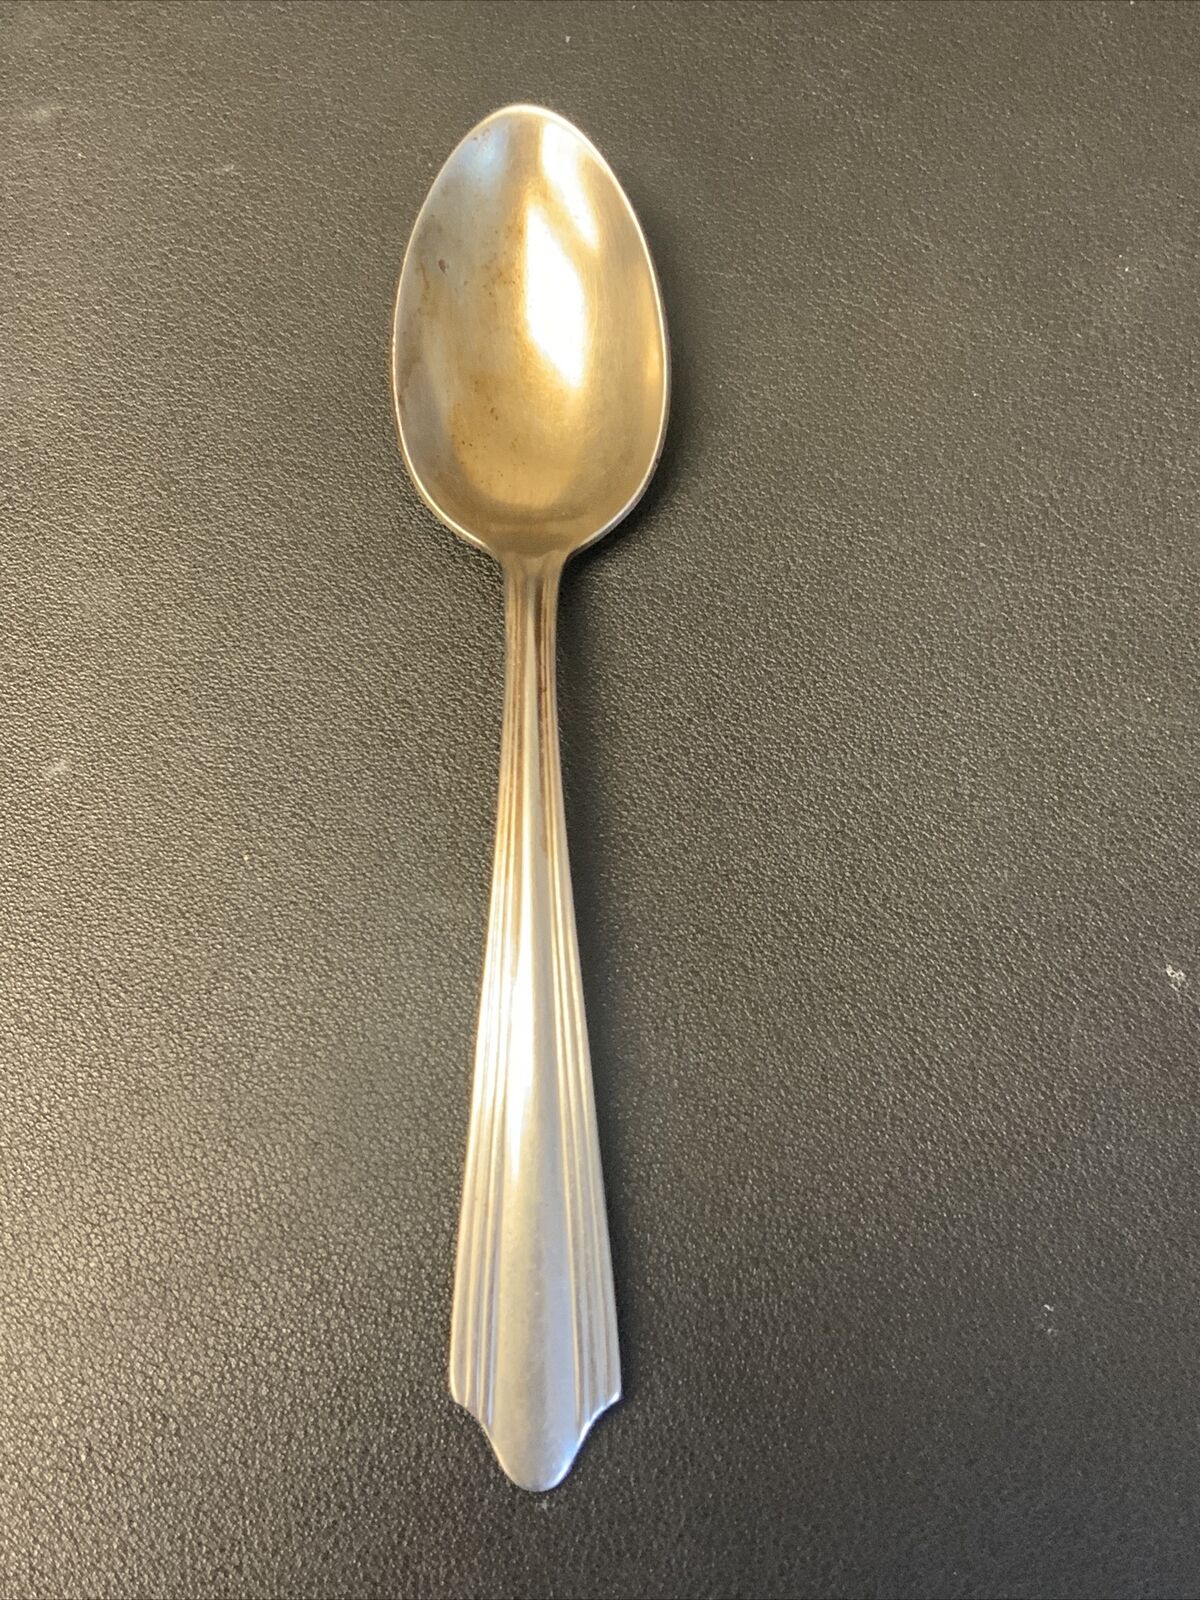 Vintage Royal Allegheny Stainless Silverware Spoon 6”